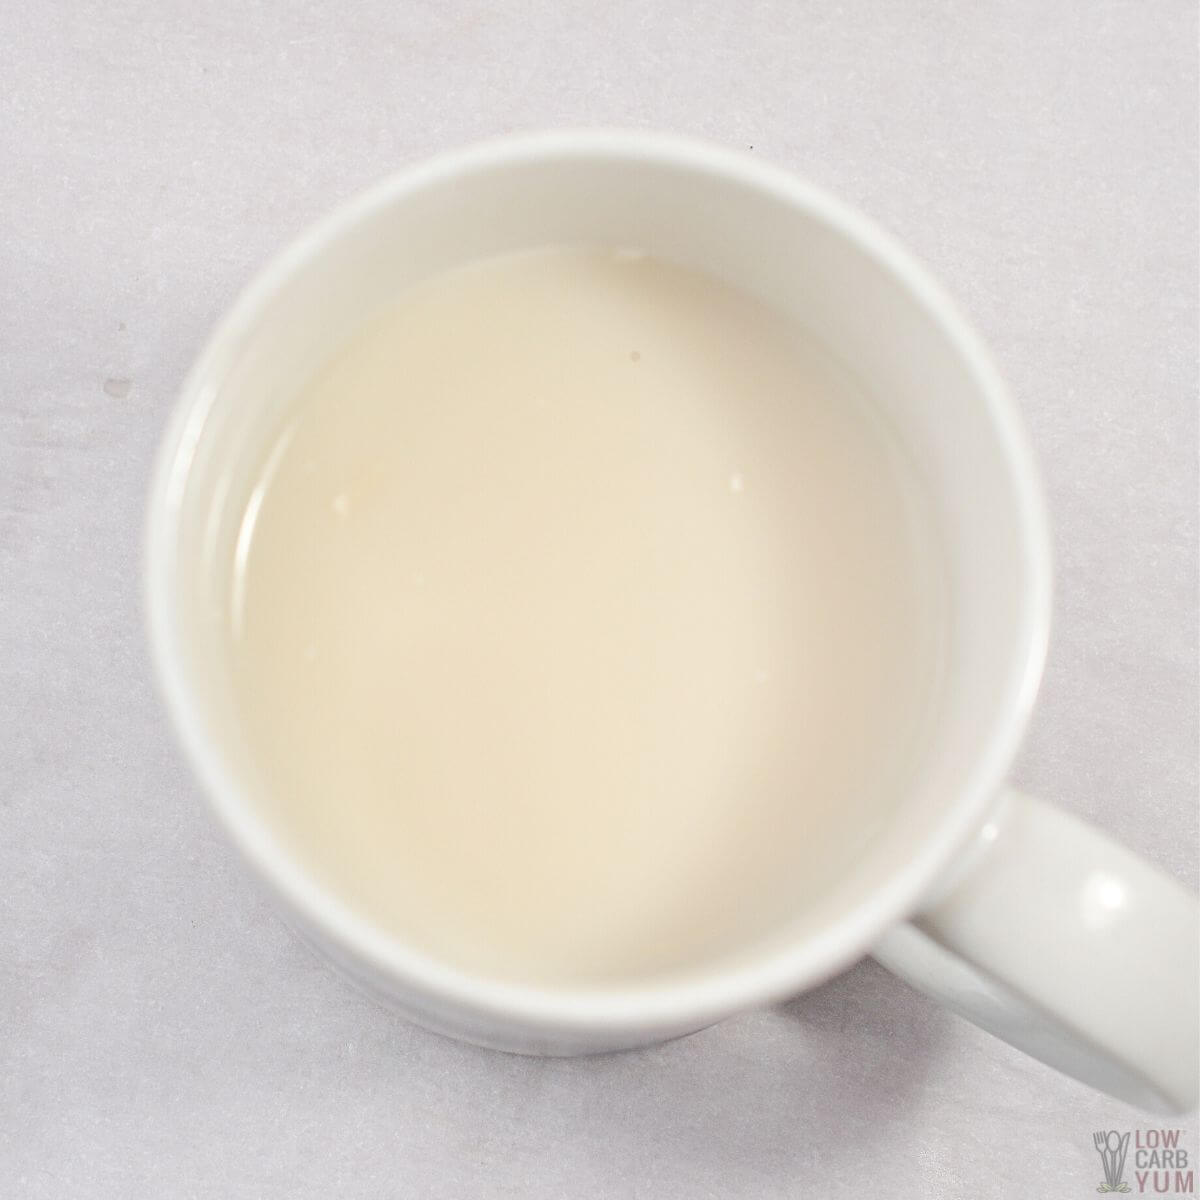 hot milk in mug.